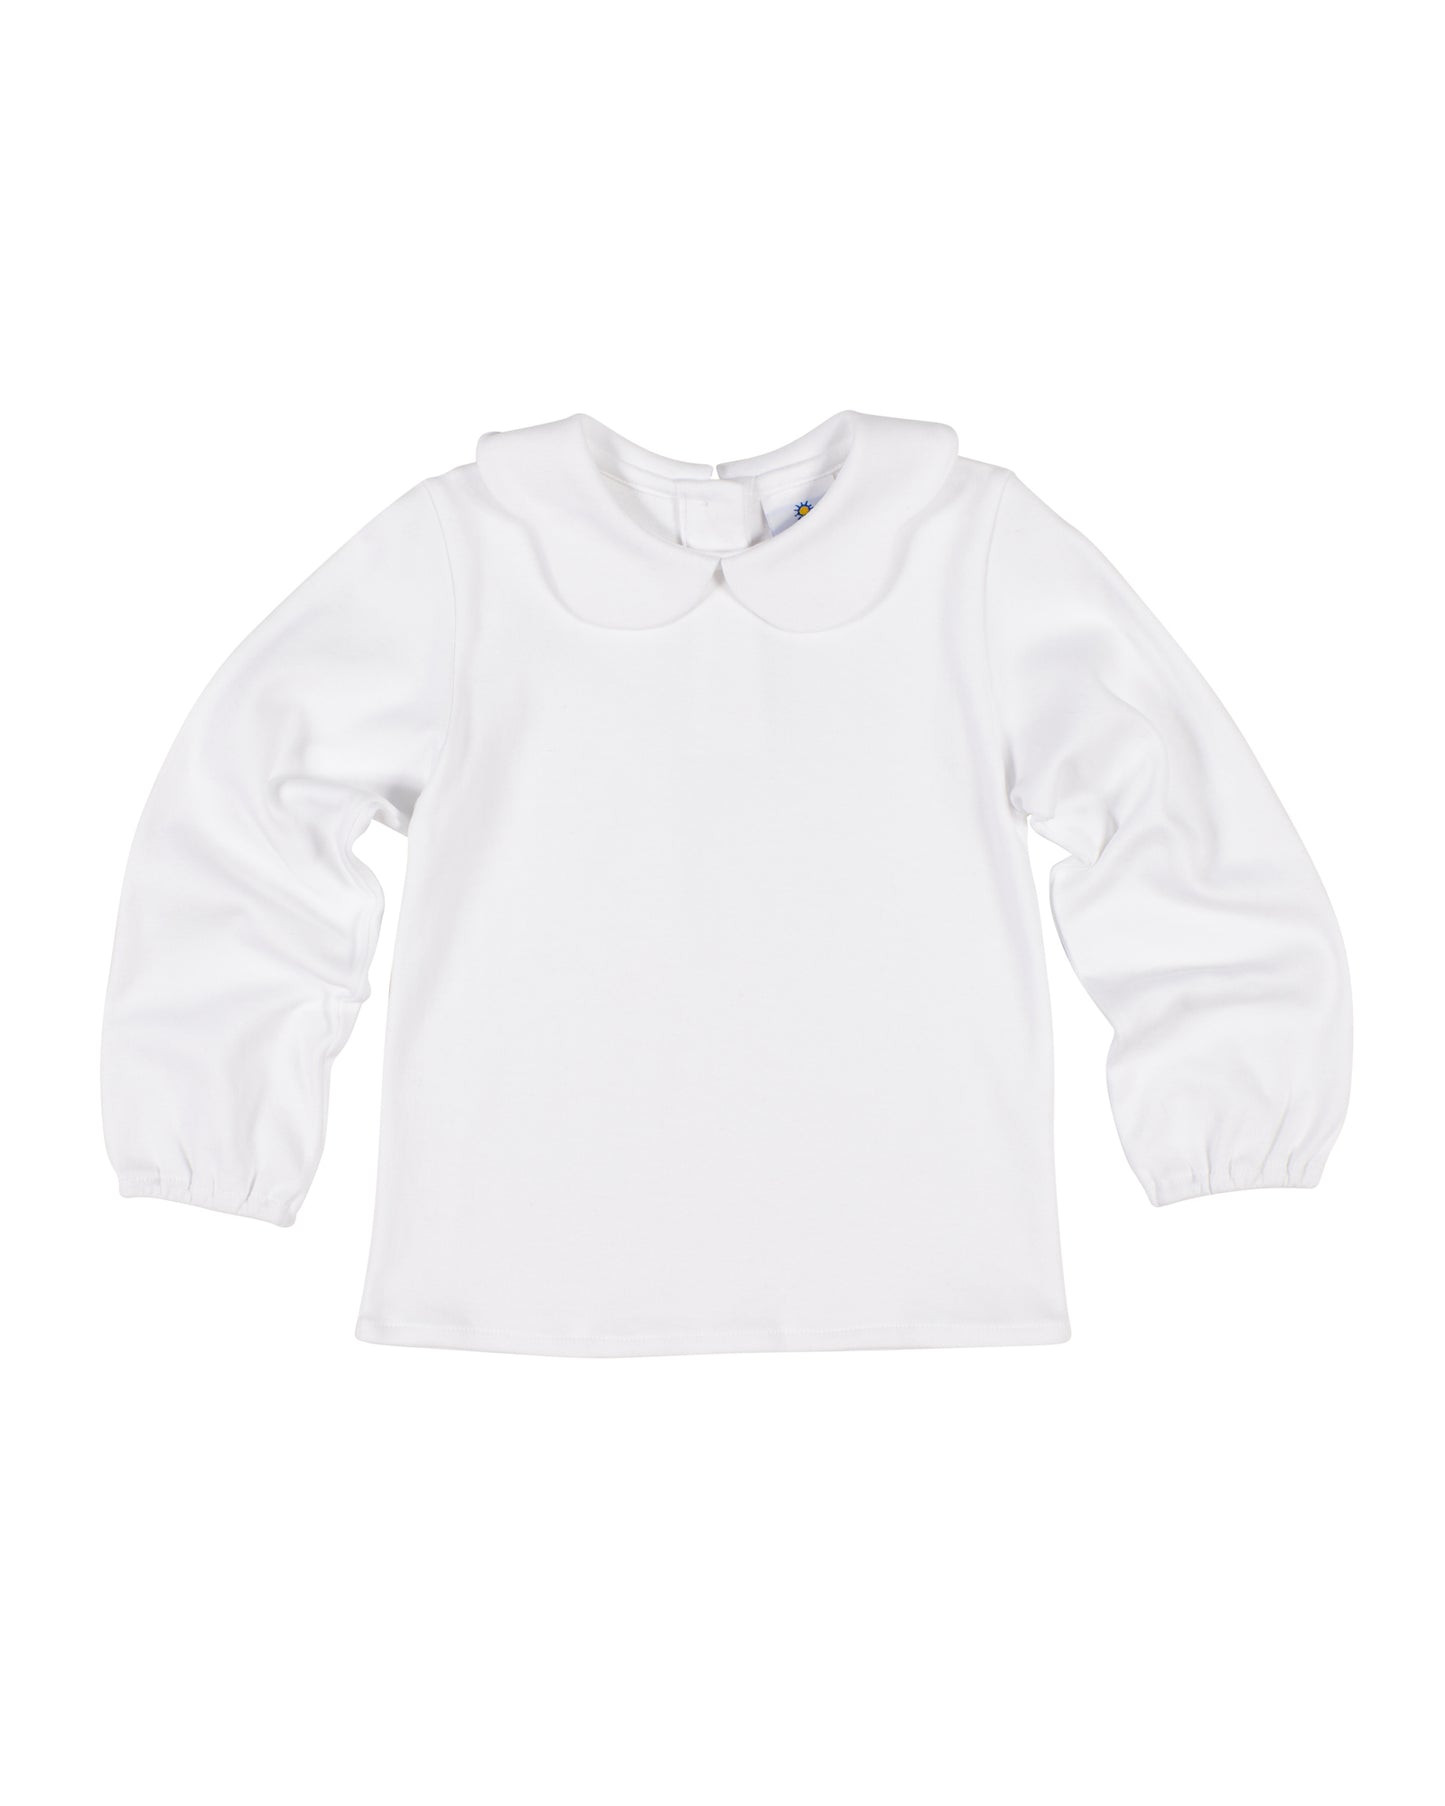 White Long Sleeve Blouse w/ Scallop Collar